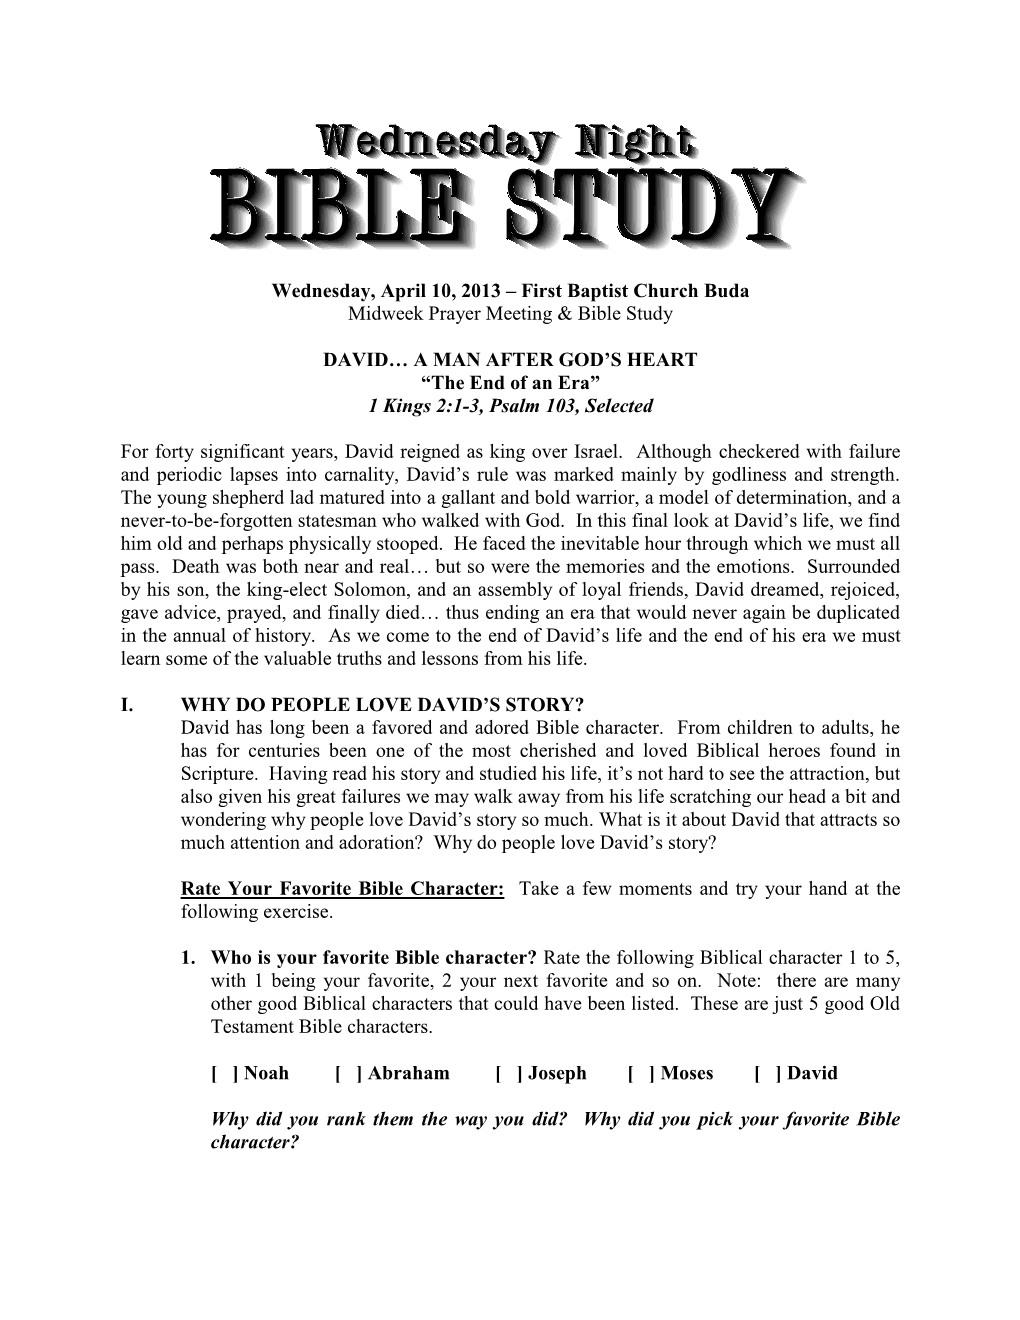 Wednesday, April 10, 2013 – First Baptist Church Buda Midweek Prayer Meeting & Bible Study